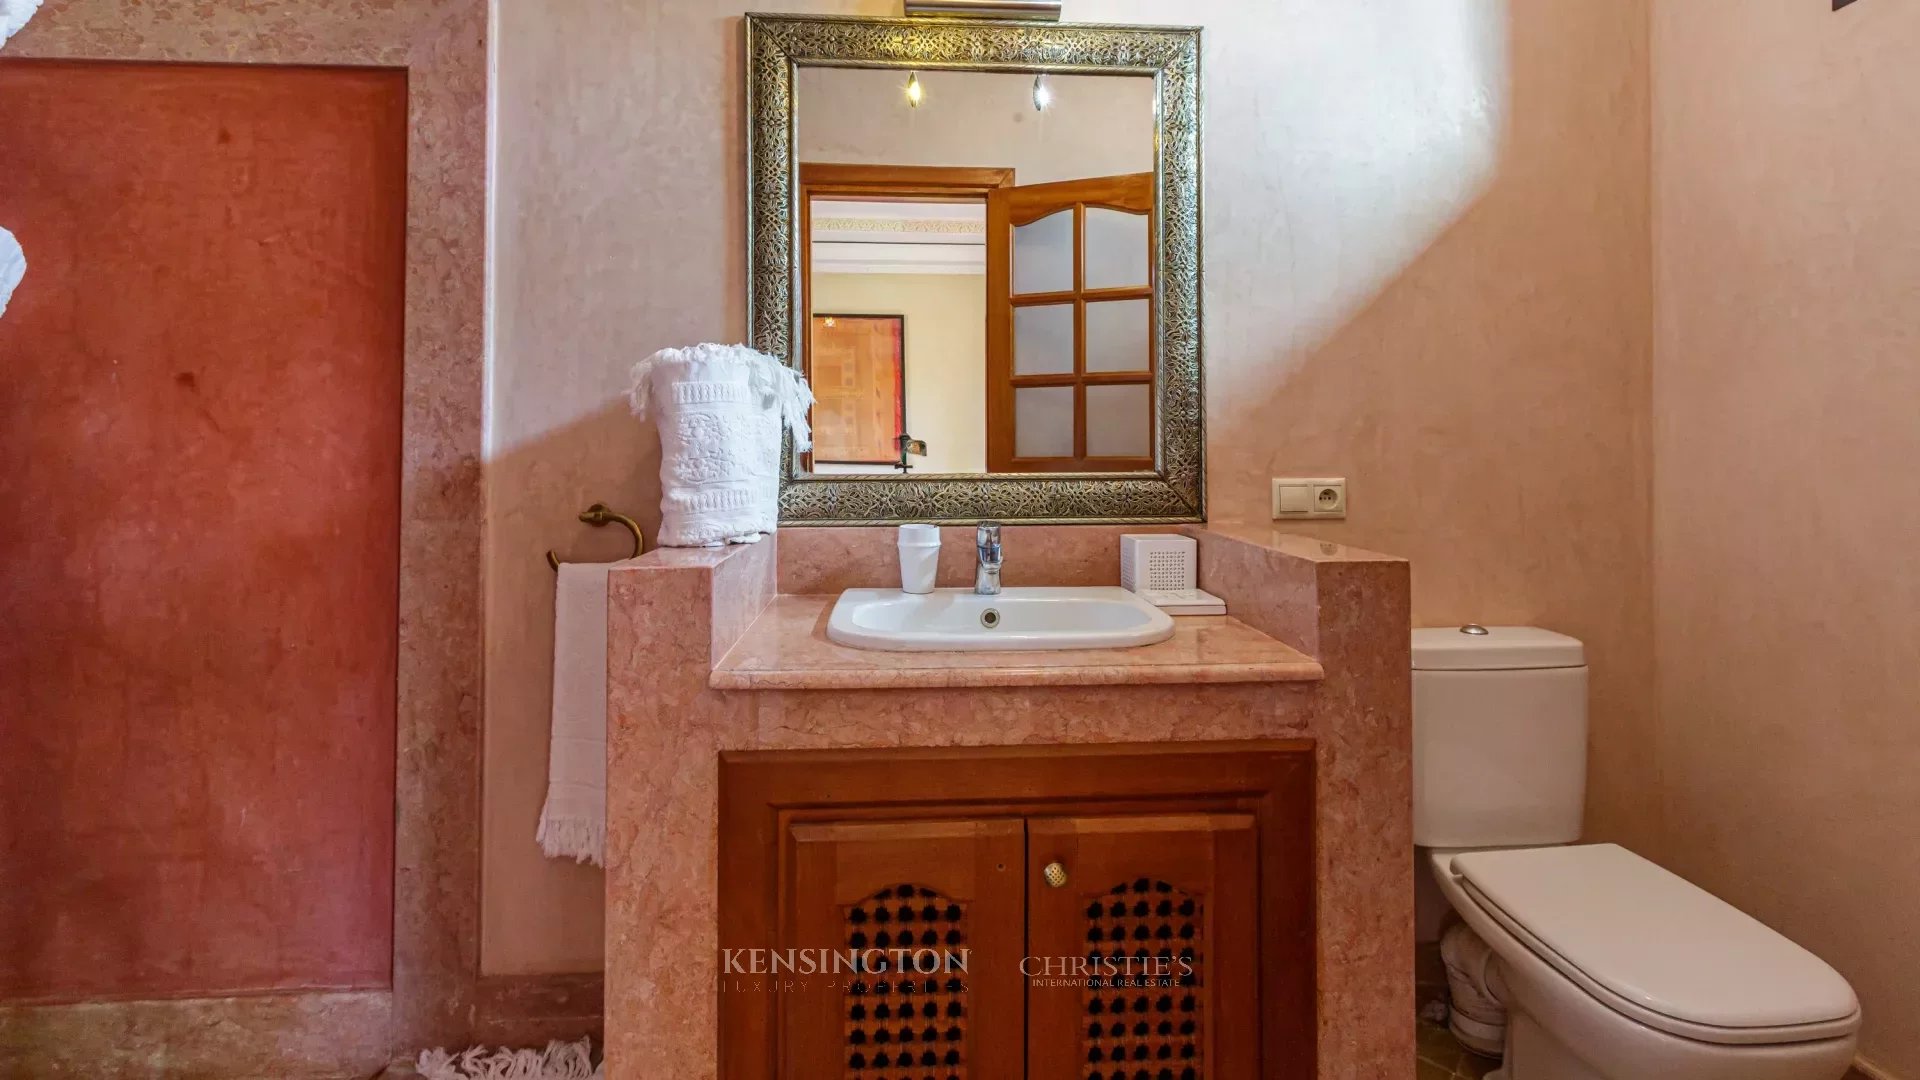 Villa Amber in Marrakech, Morocco